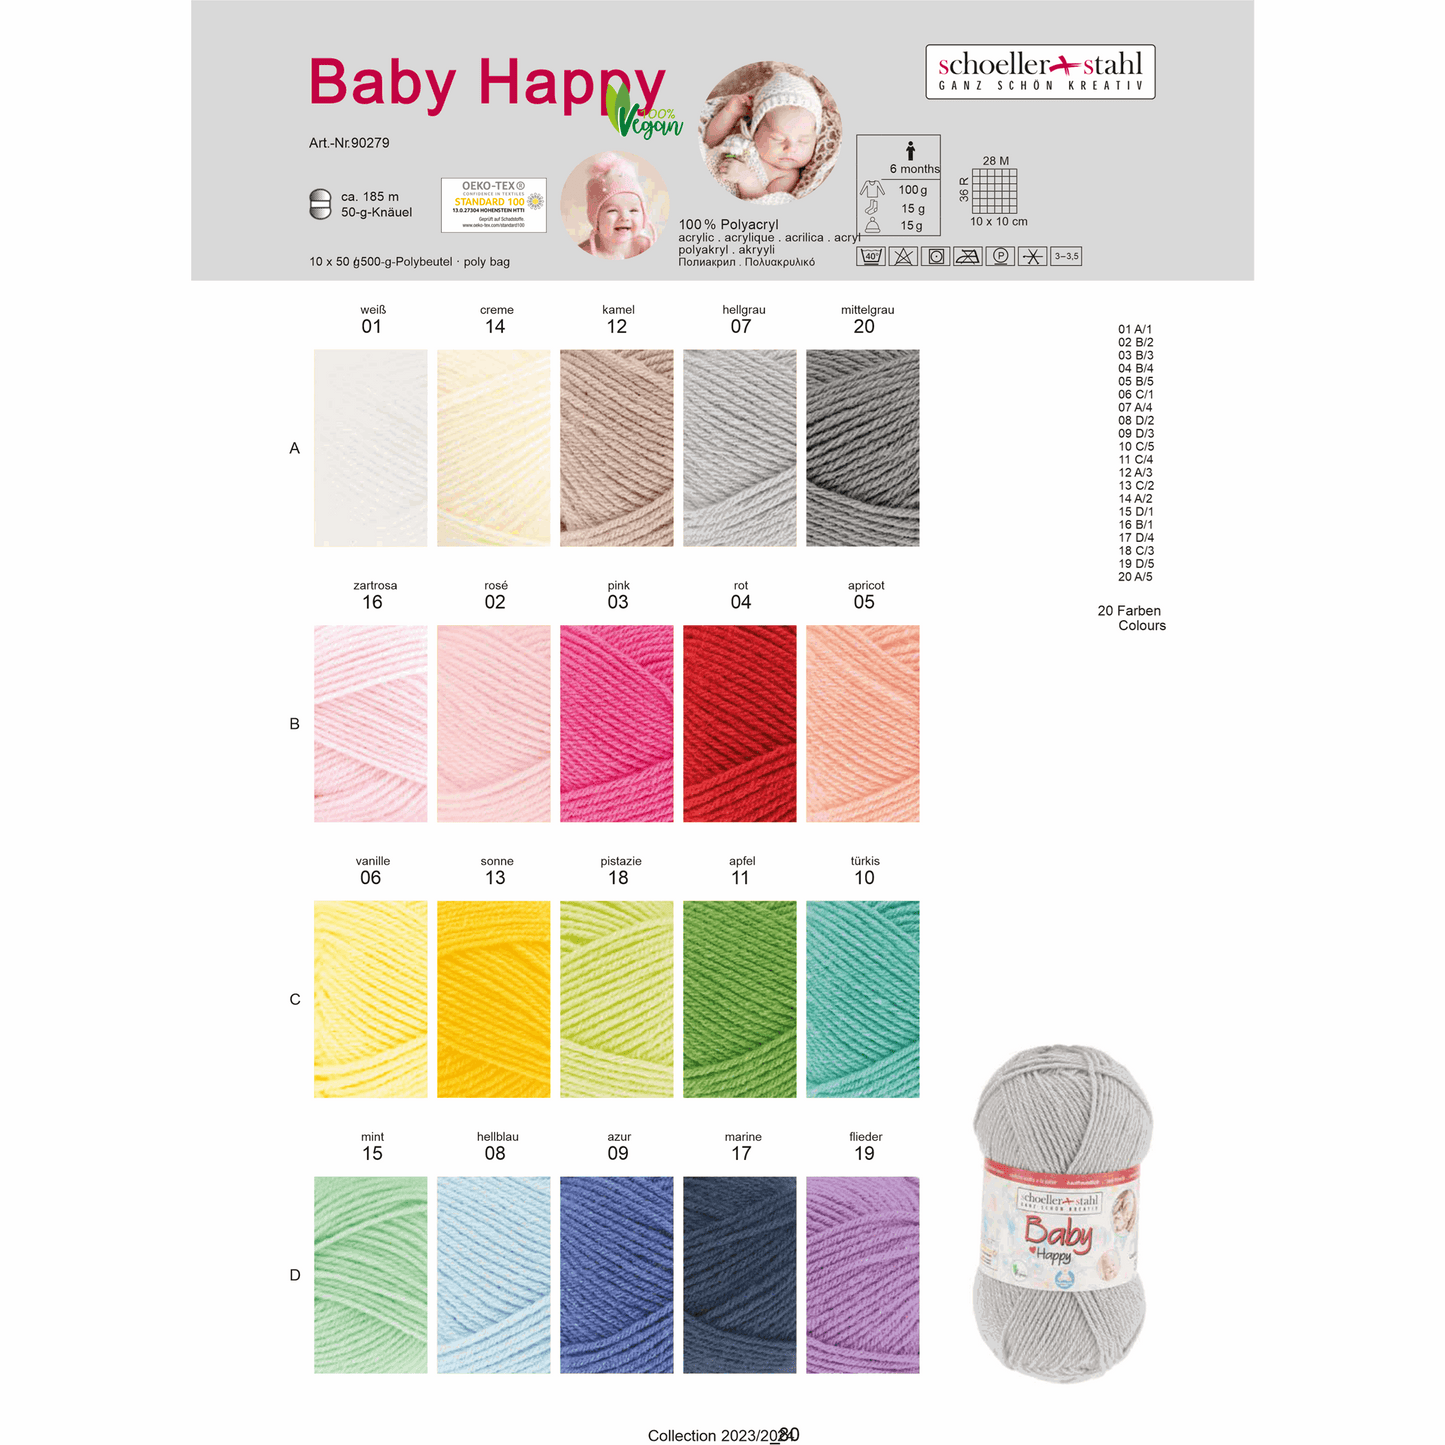 Baby happy 50g, 90279, Farbe 15, mint